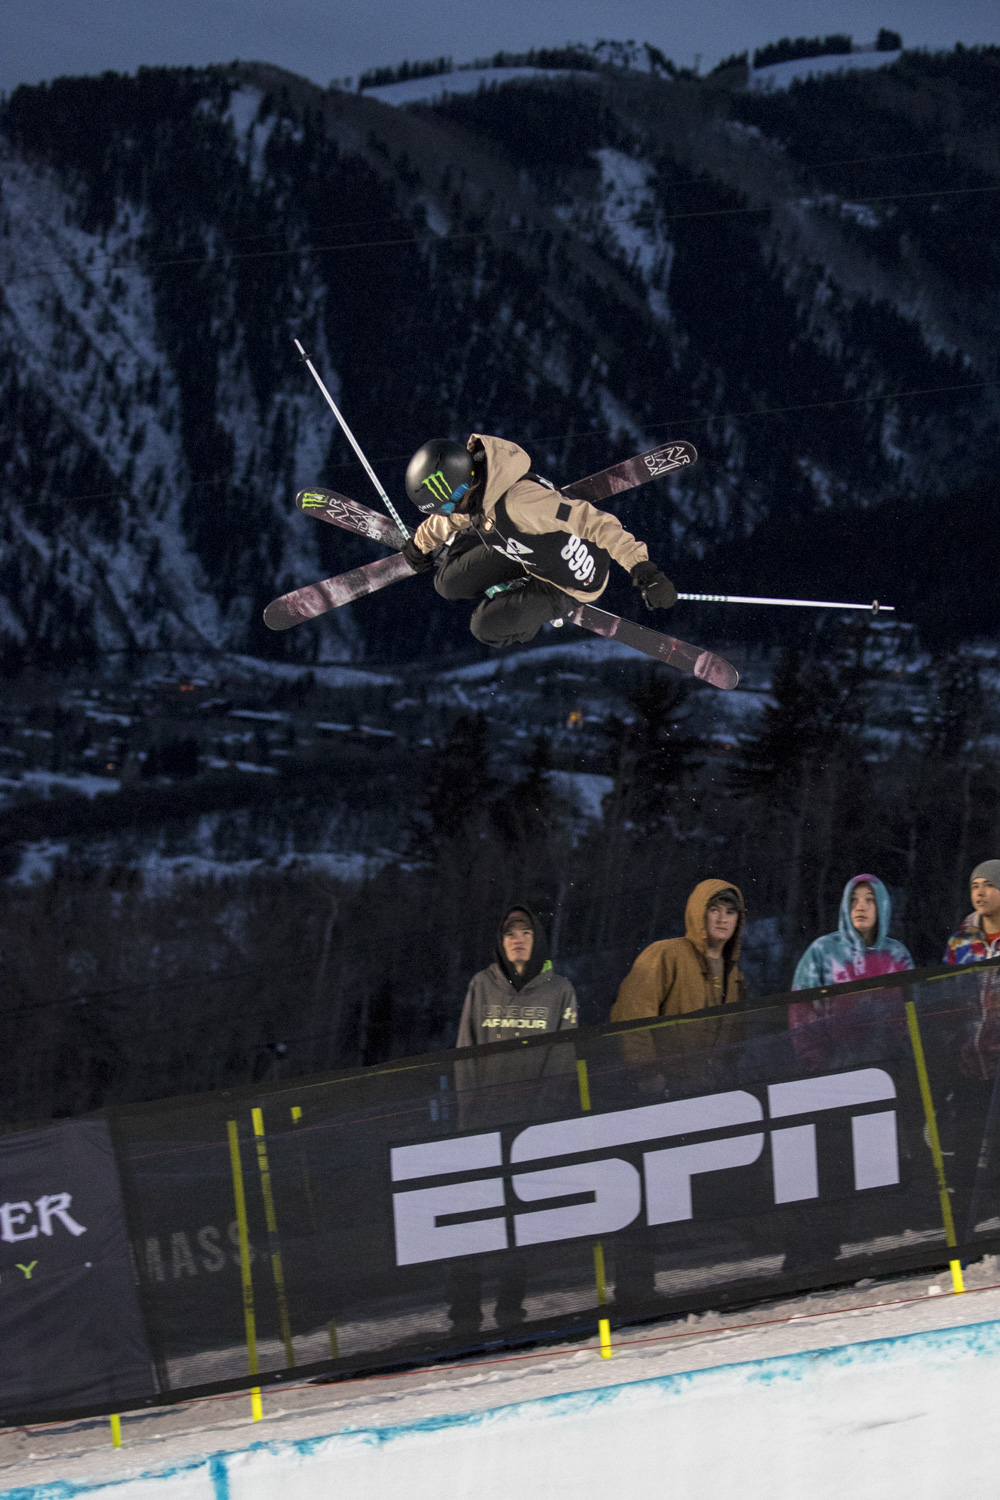 Monster Energy's Brita Sigourney Takes Silver in Women's Ski SuperPipe at X Games Aspen 2018